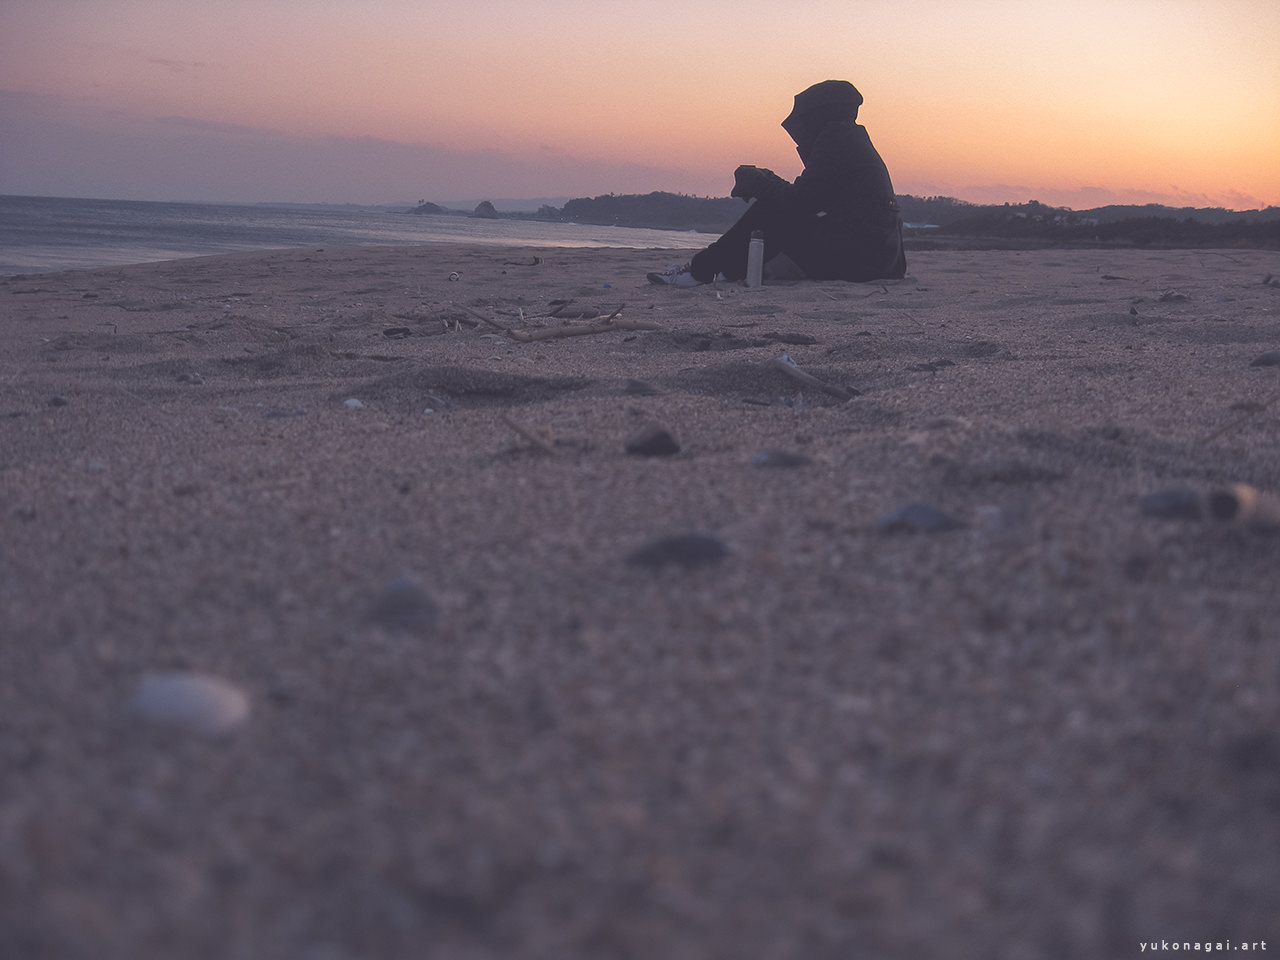 A silhouette of a person having a tea on the beach at sundown.